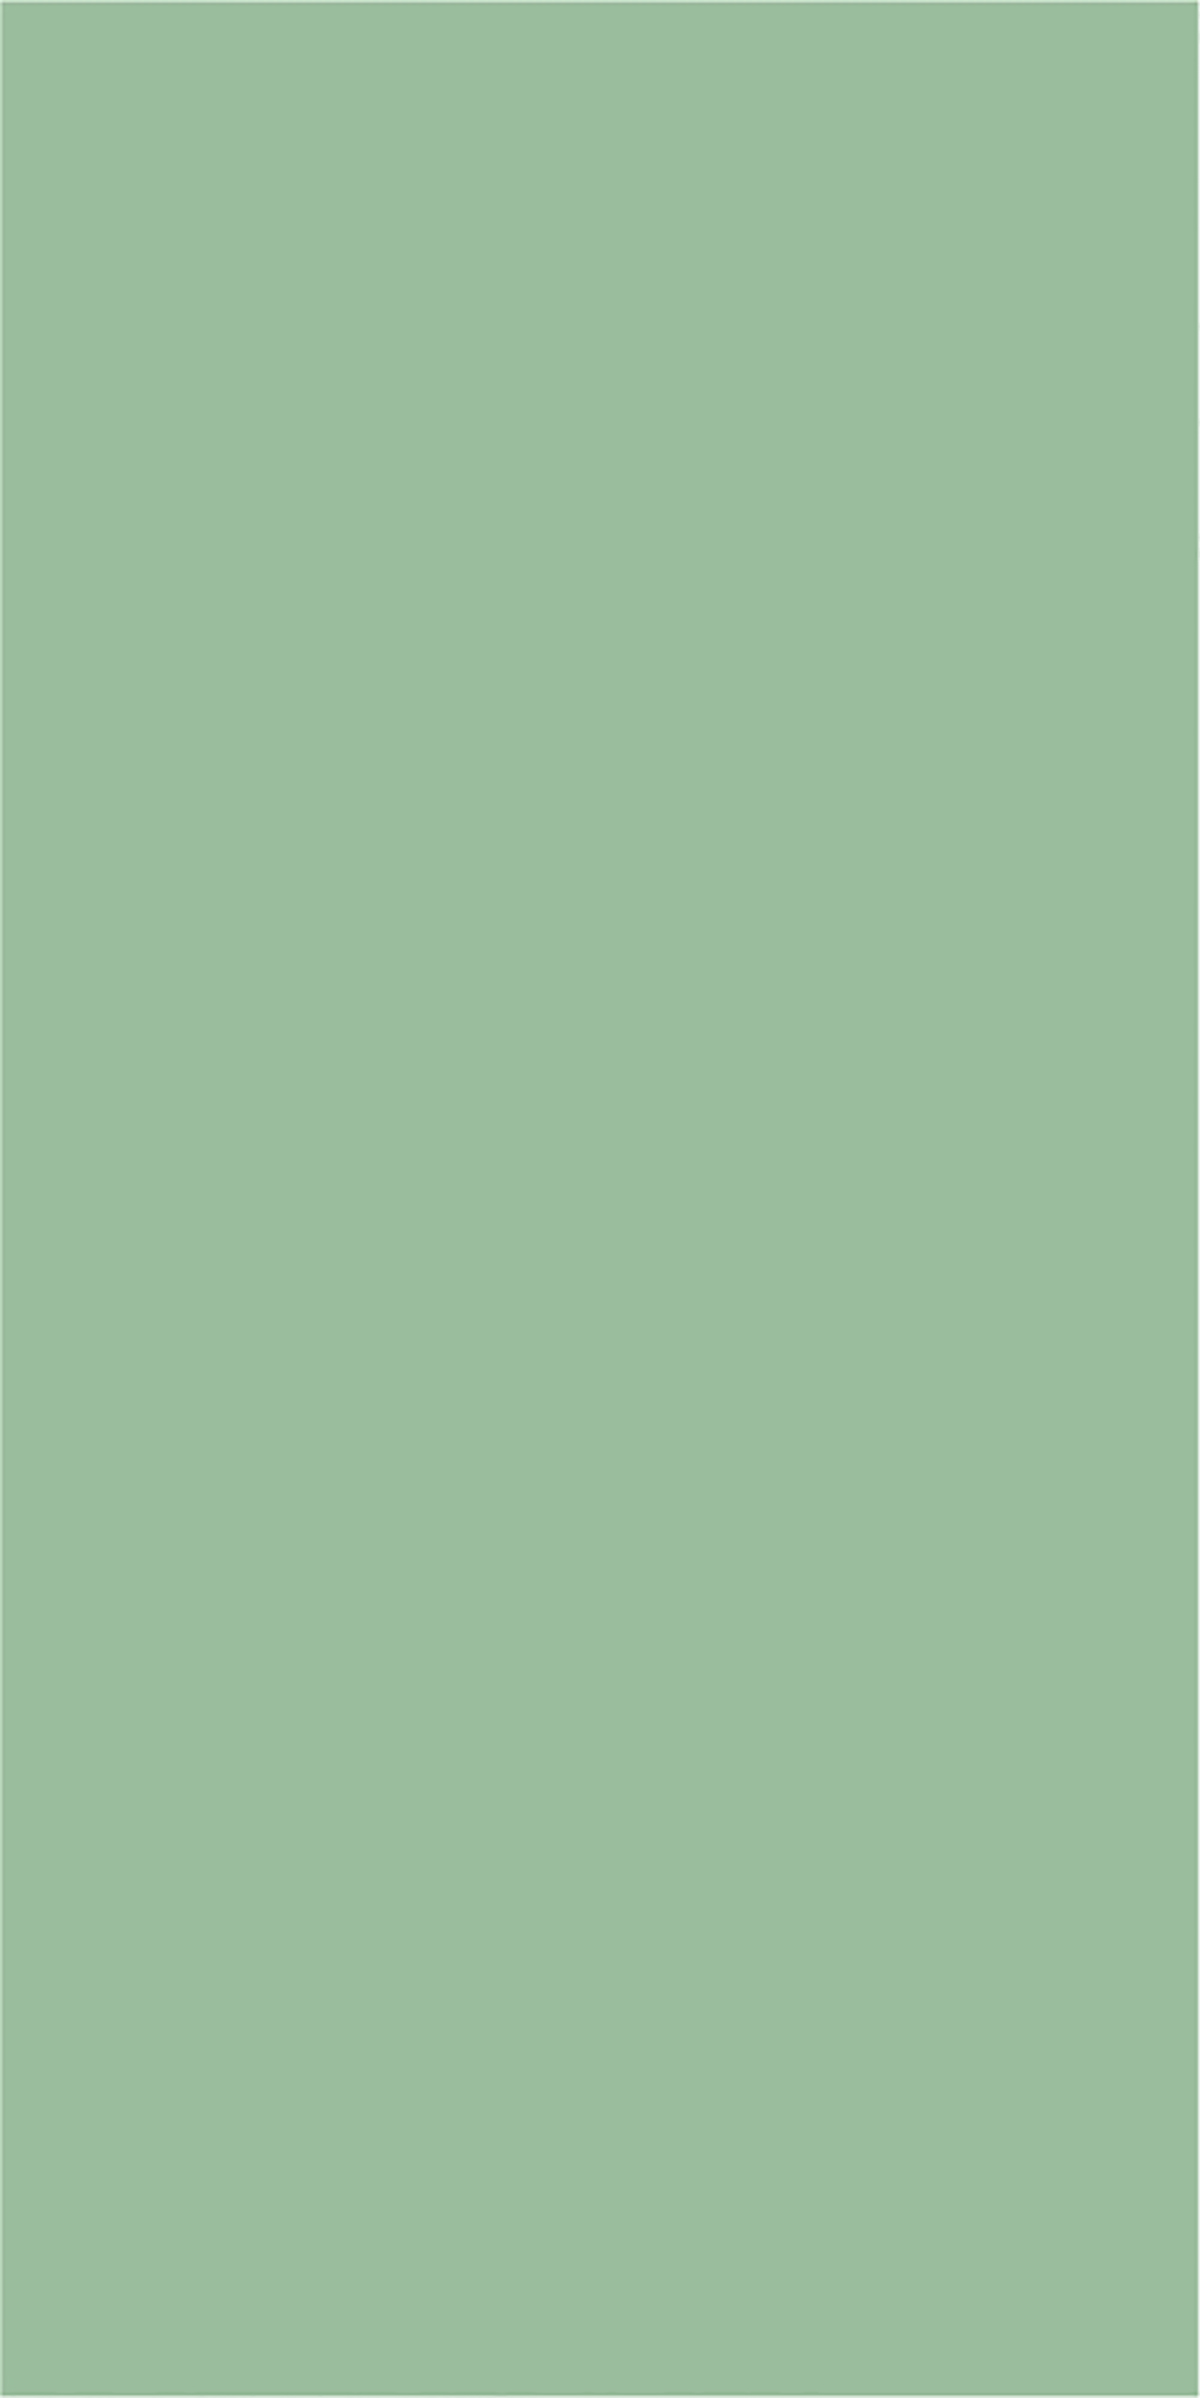 Pista Green 1mm Thickness decorative laminate sheets - Samratply